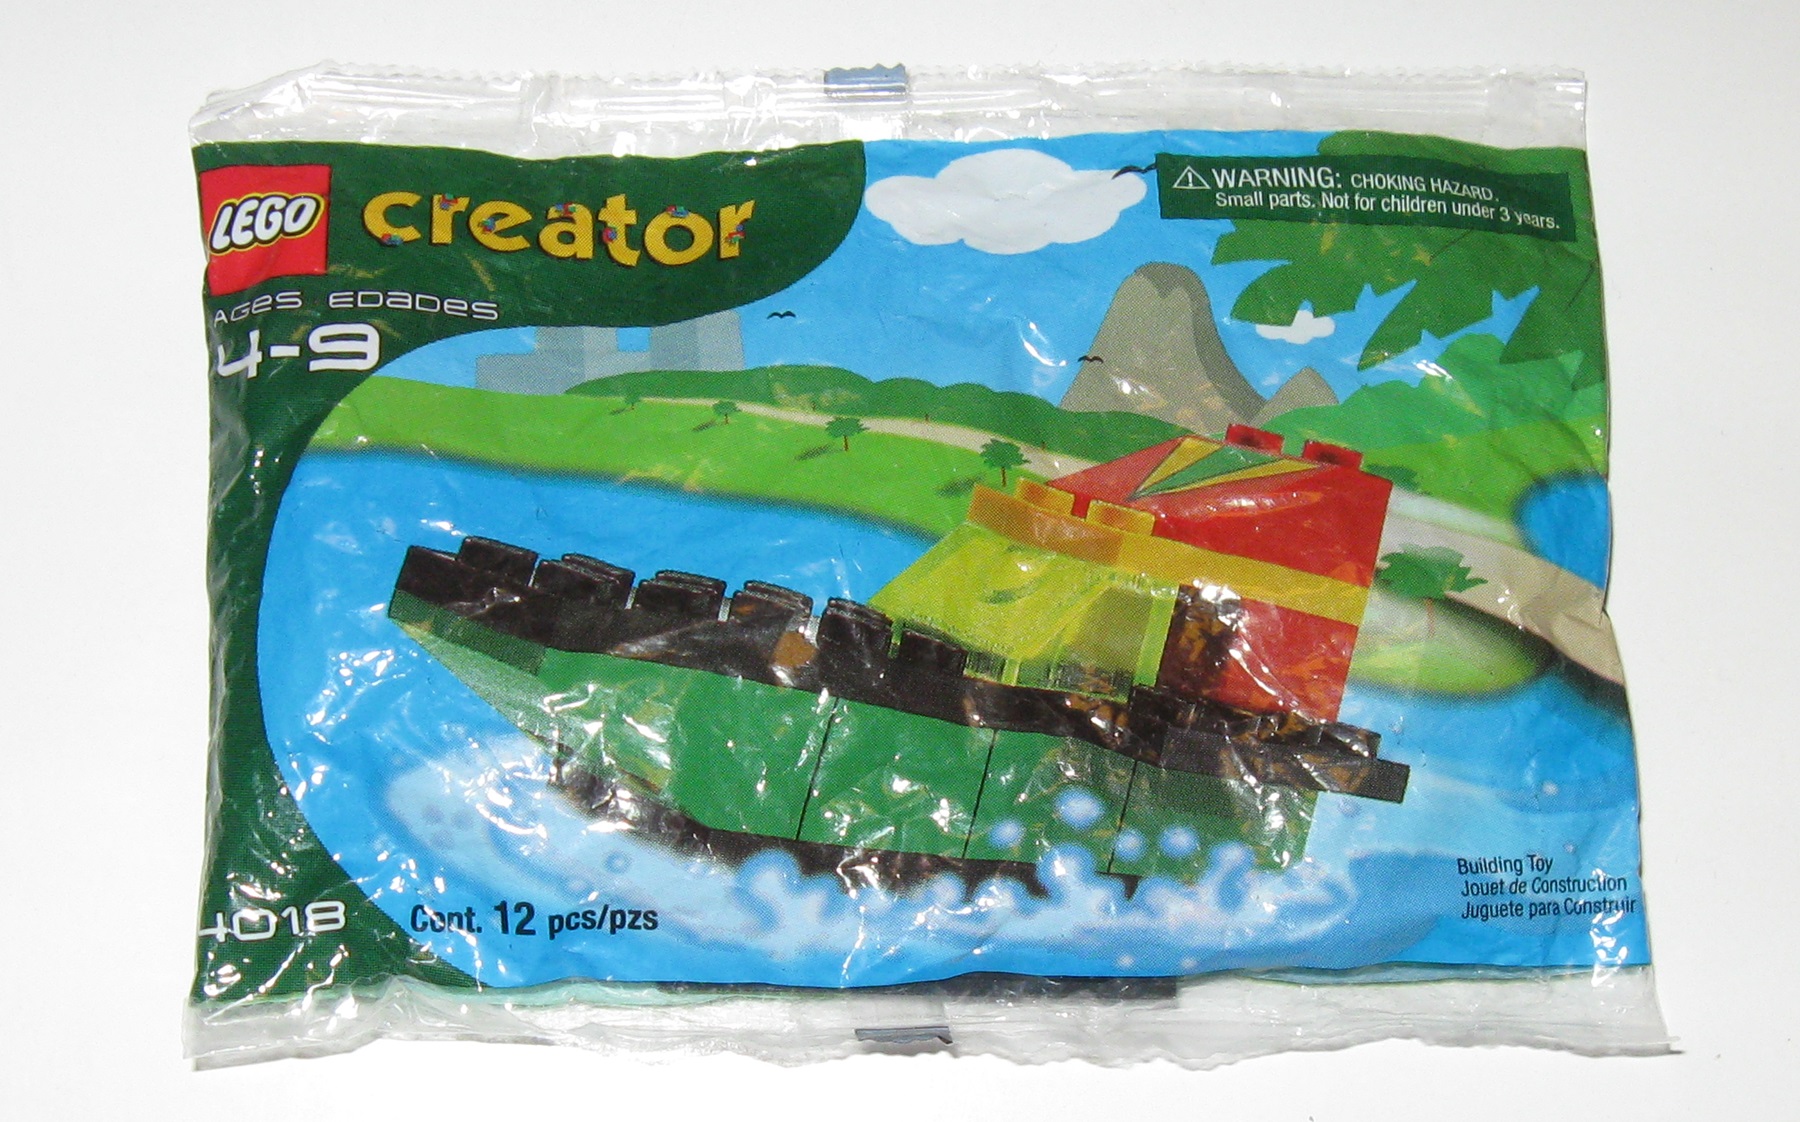 0010 Lego Creator 4018